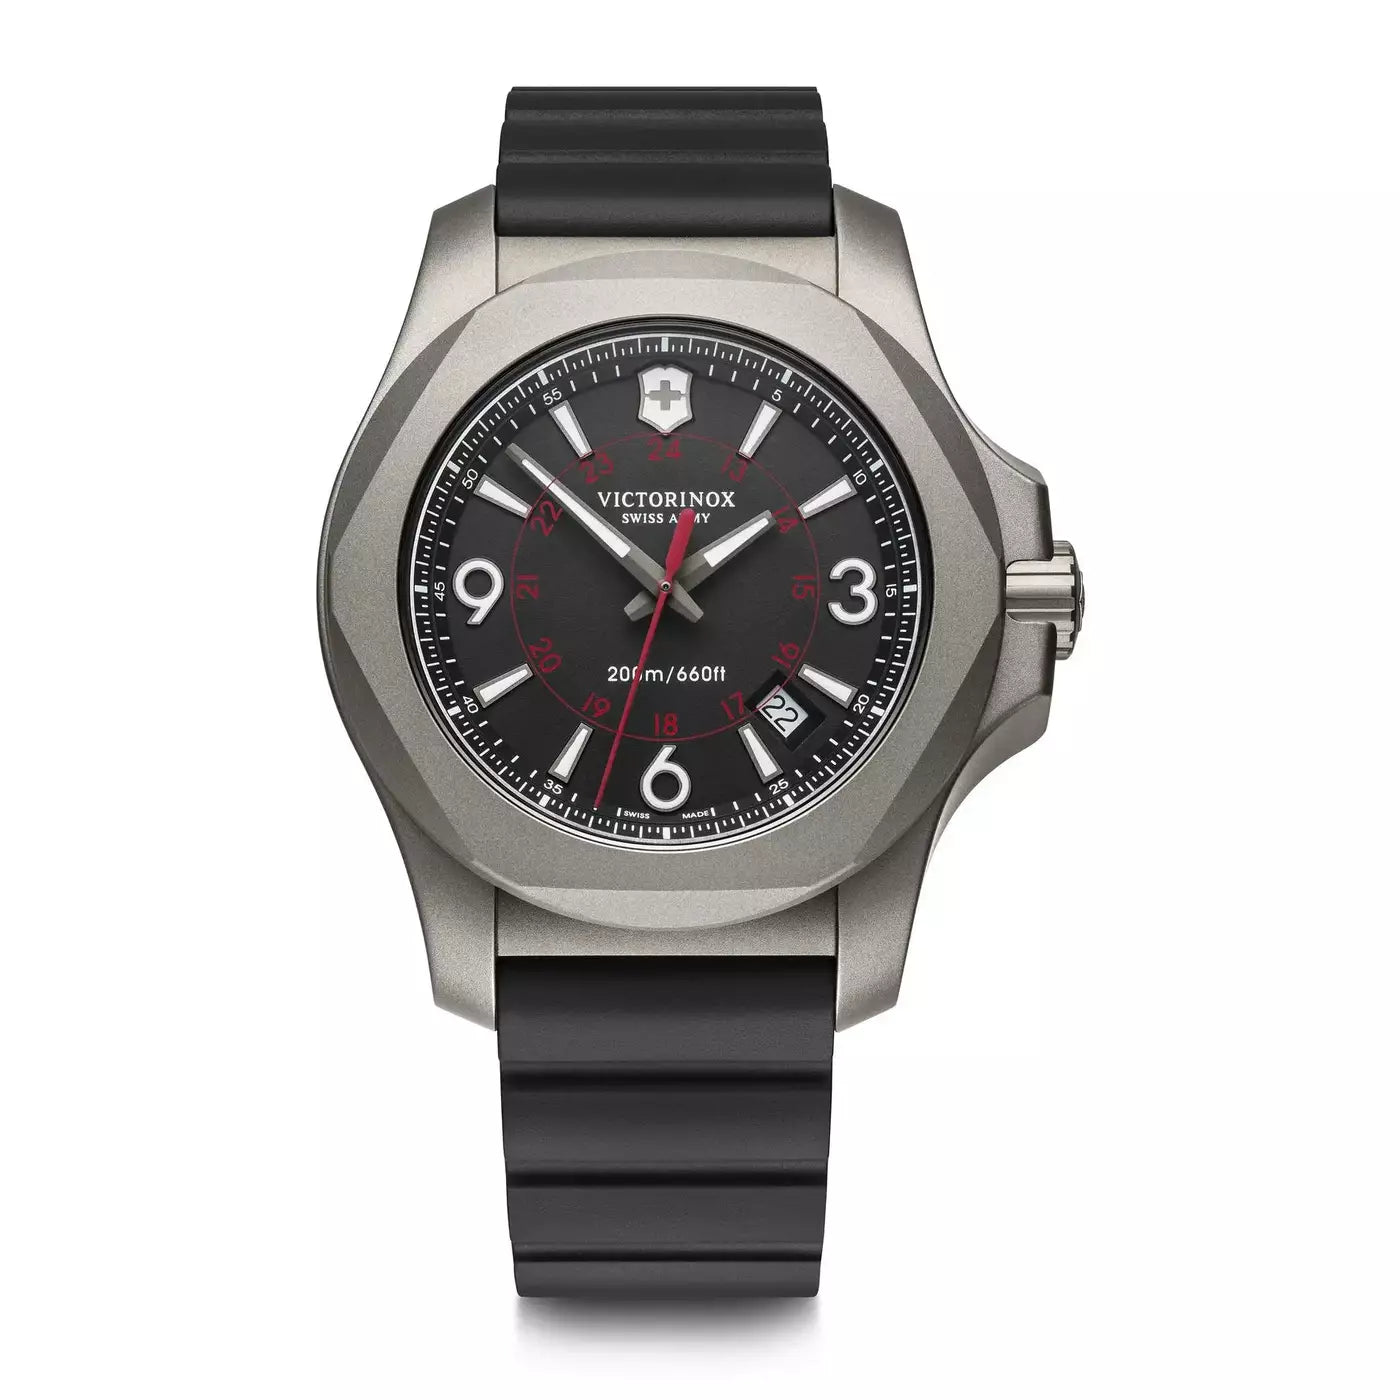 Men's I.N.O.X. Titanium Watch 241883 Victorinox Swiss Army